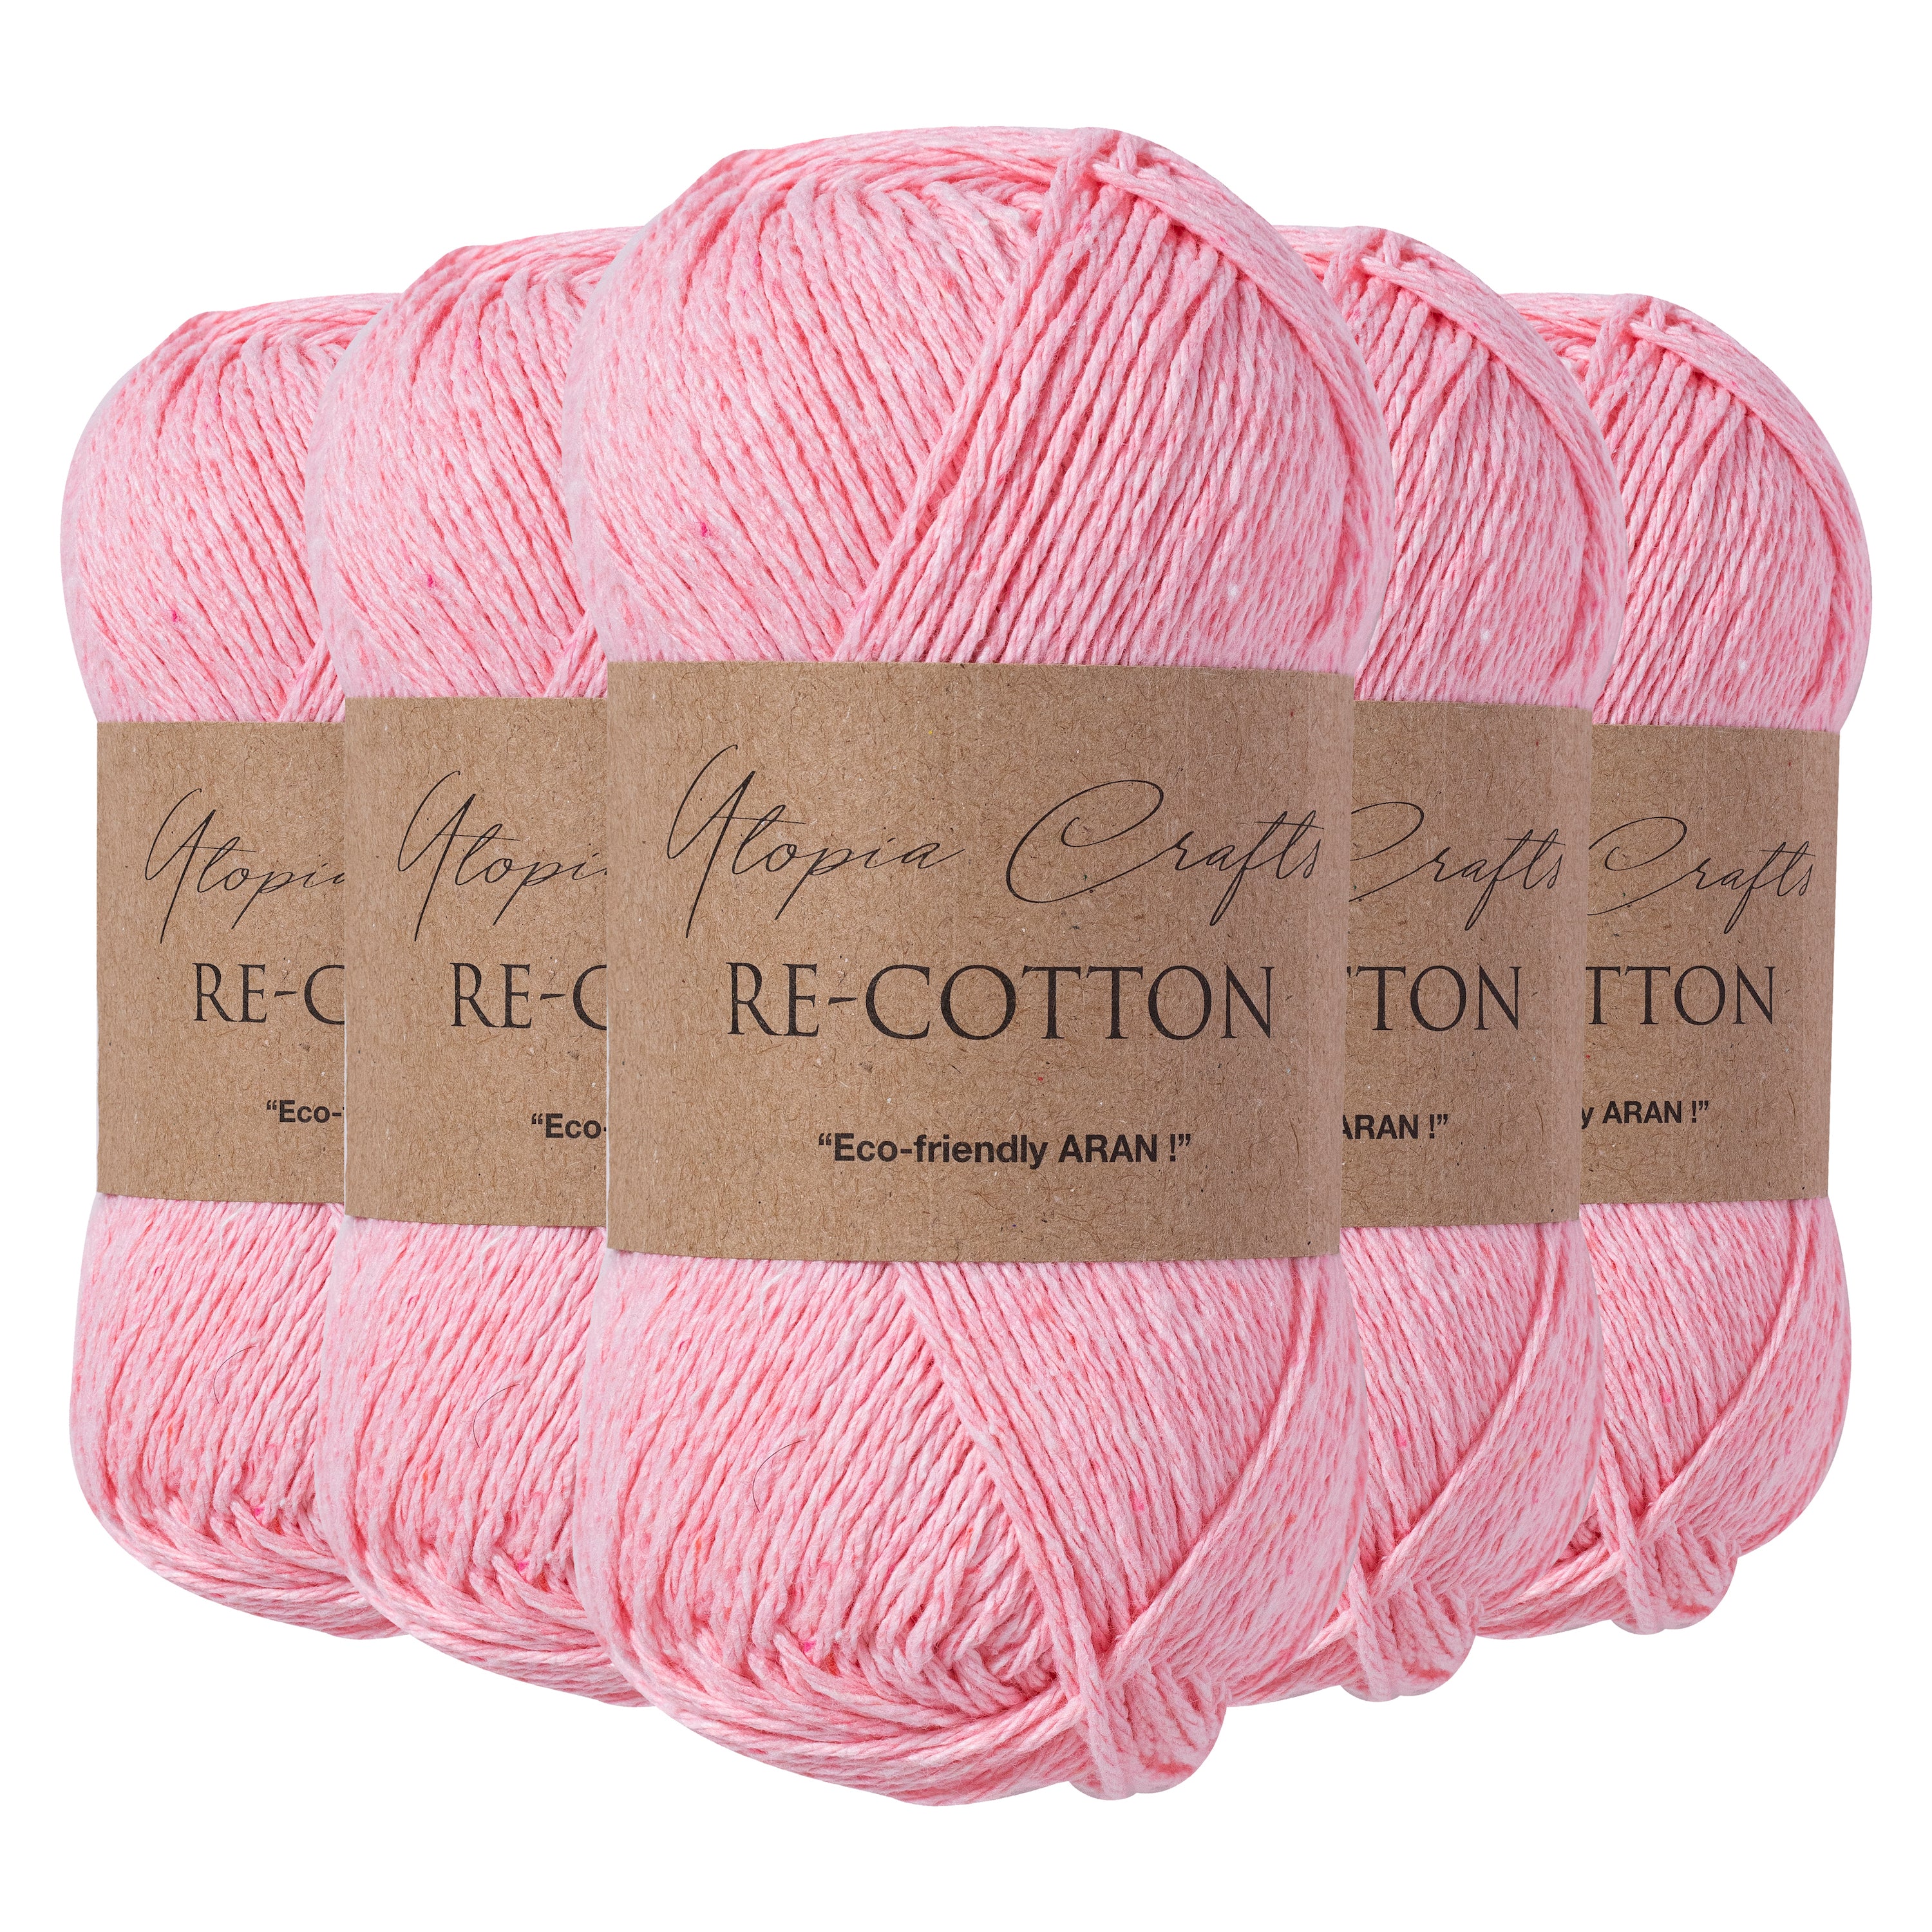 Utopia Crafts Re-Cotton Knitting Yarn, 5x 100g [Light Pink]